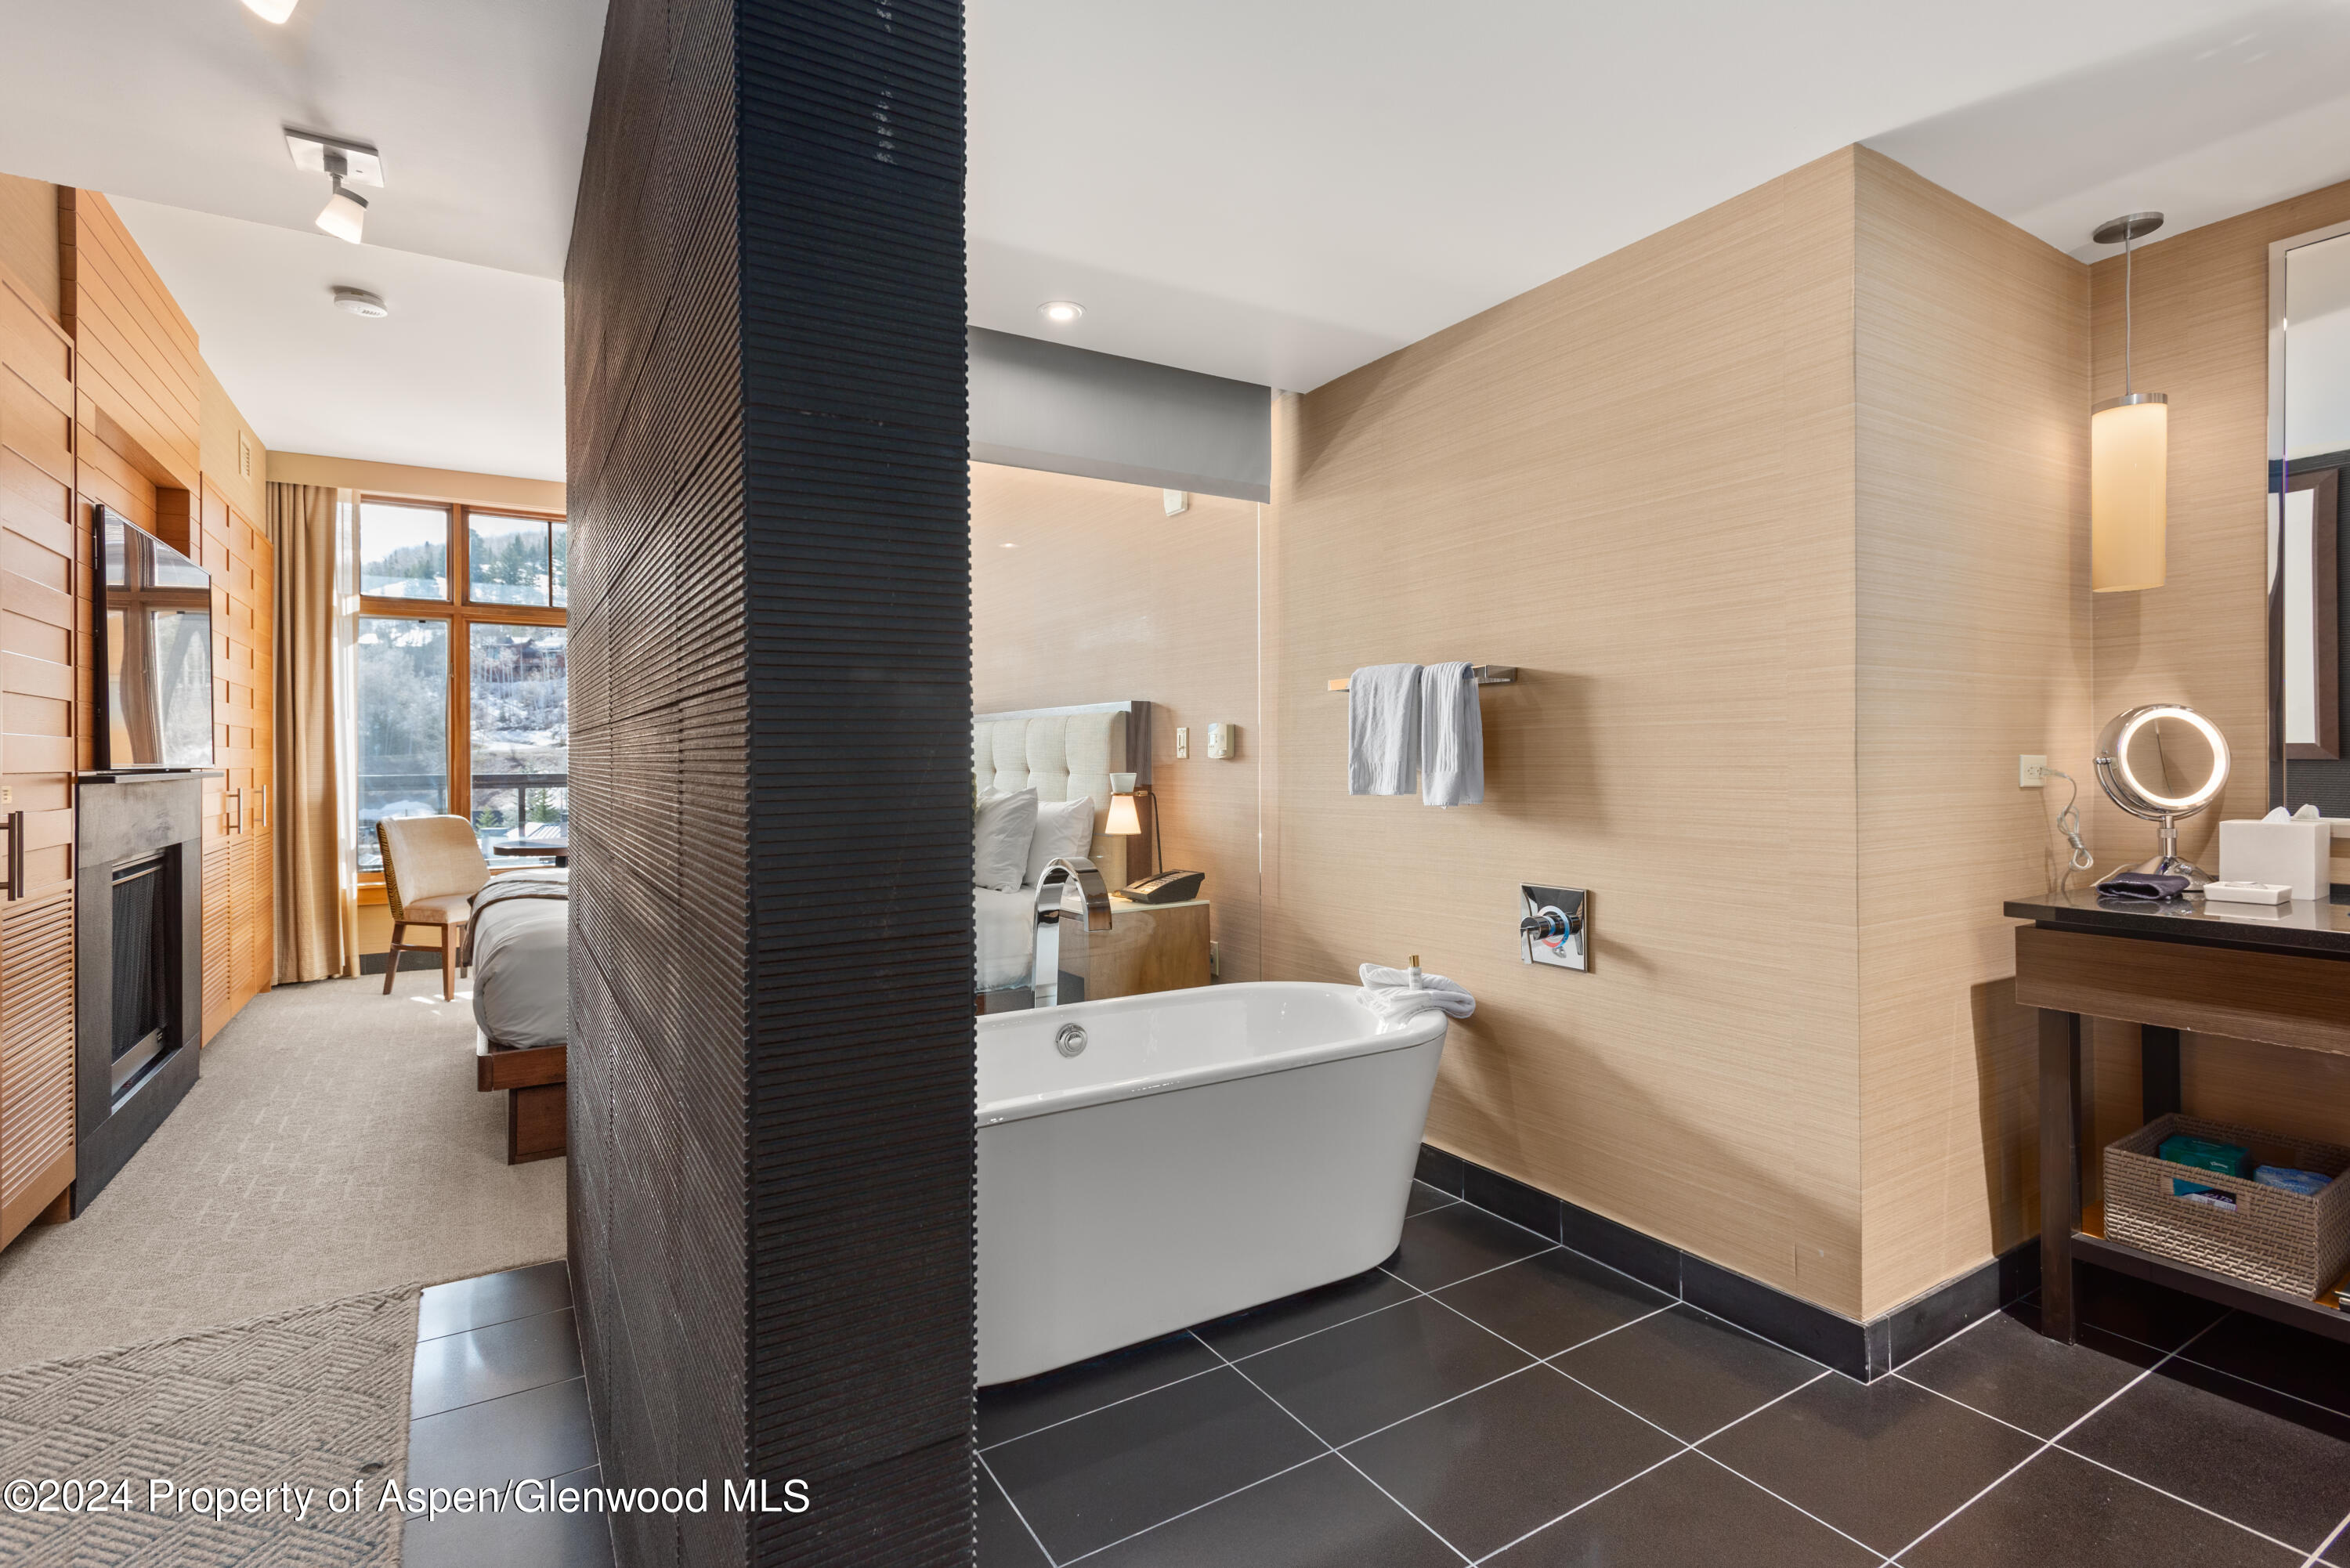 a en suite bathroom with a tub sink and mirror